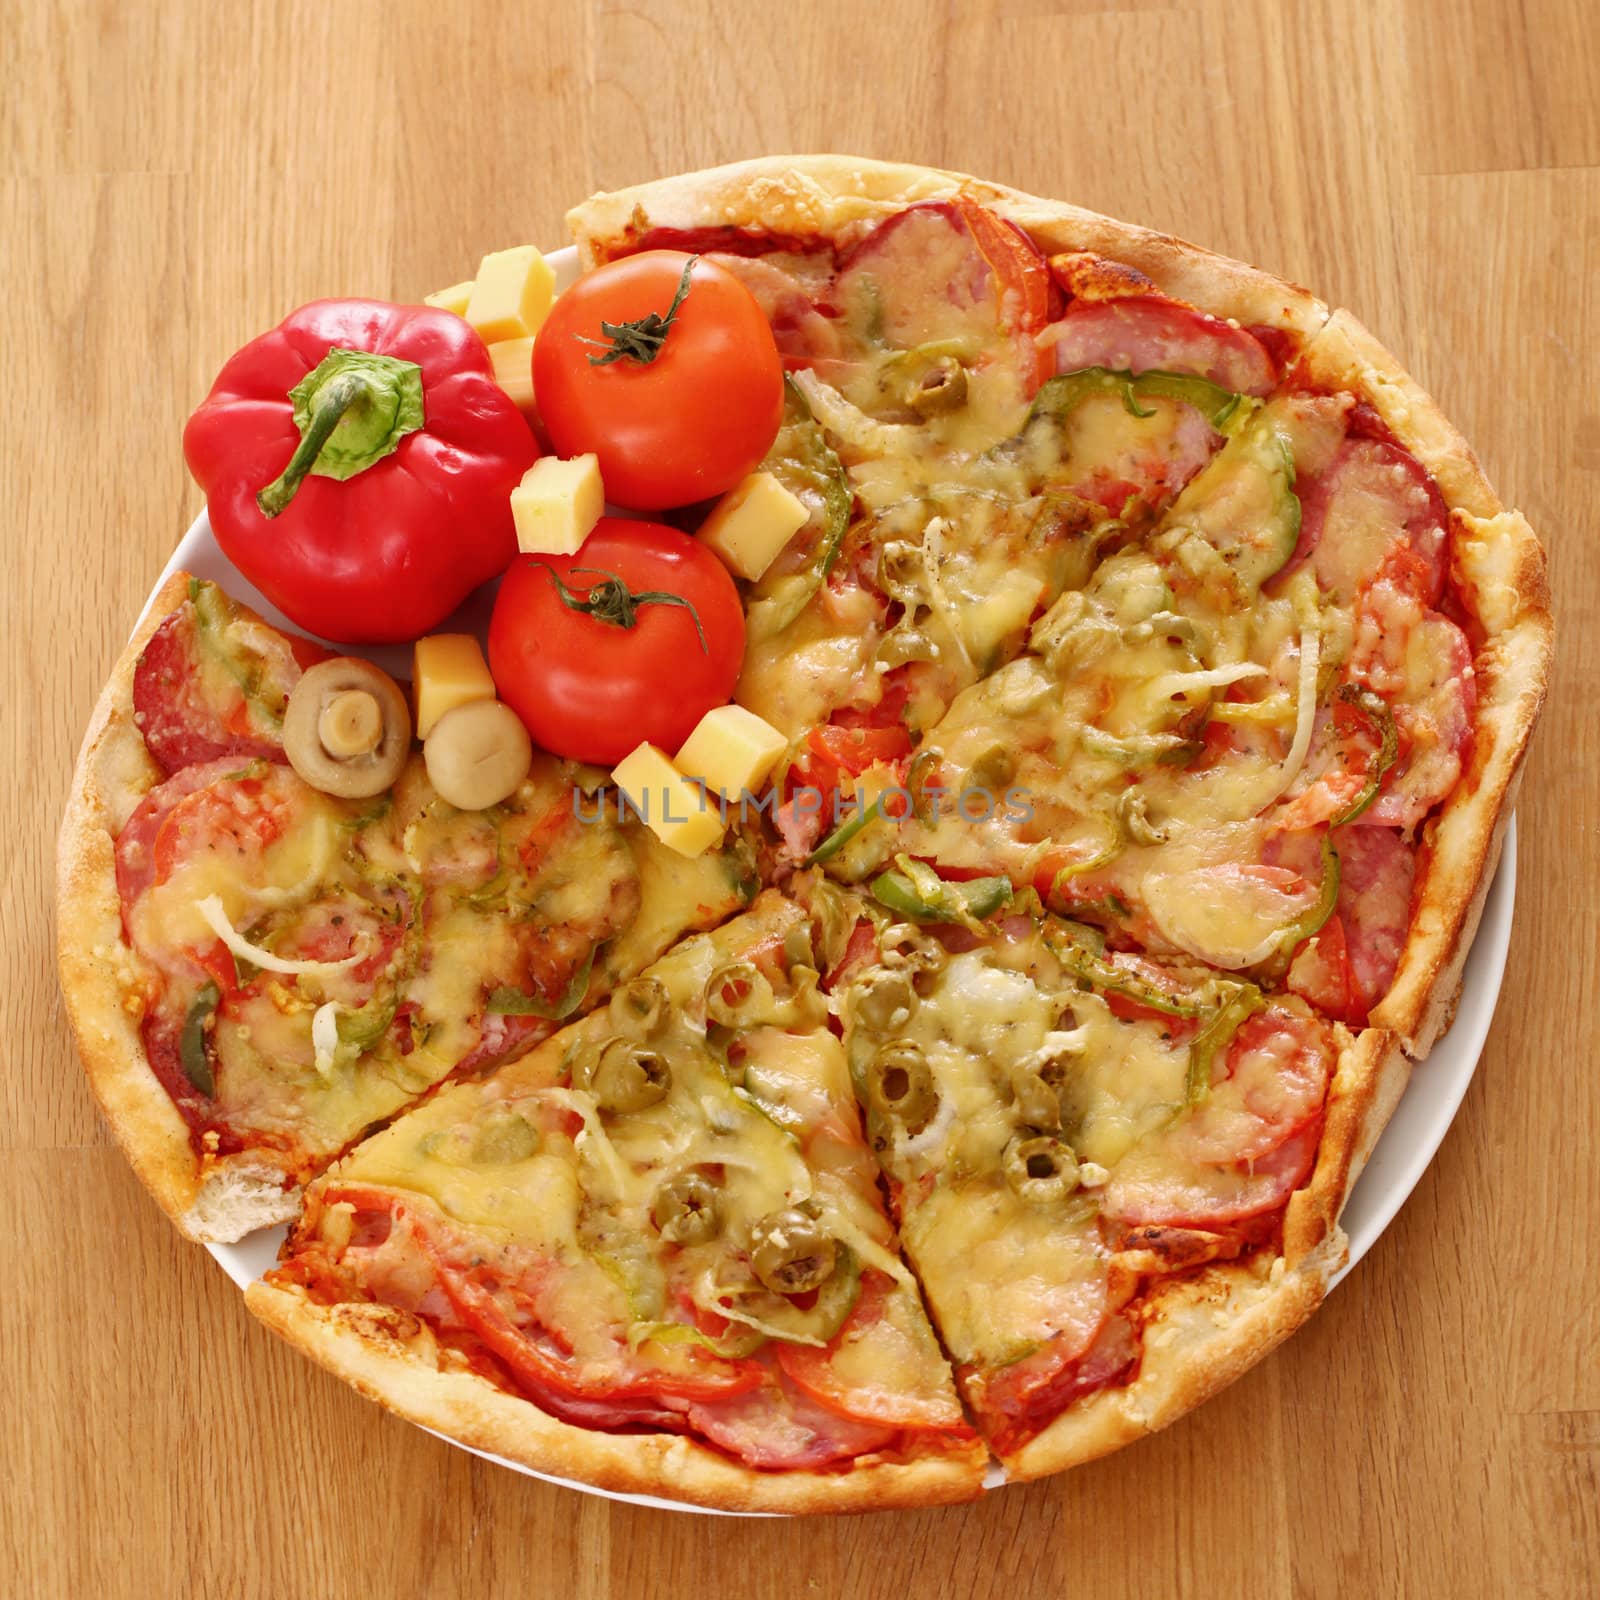 Fresh italian pizza in plate on a wooden surface by rufatjumali